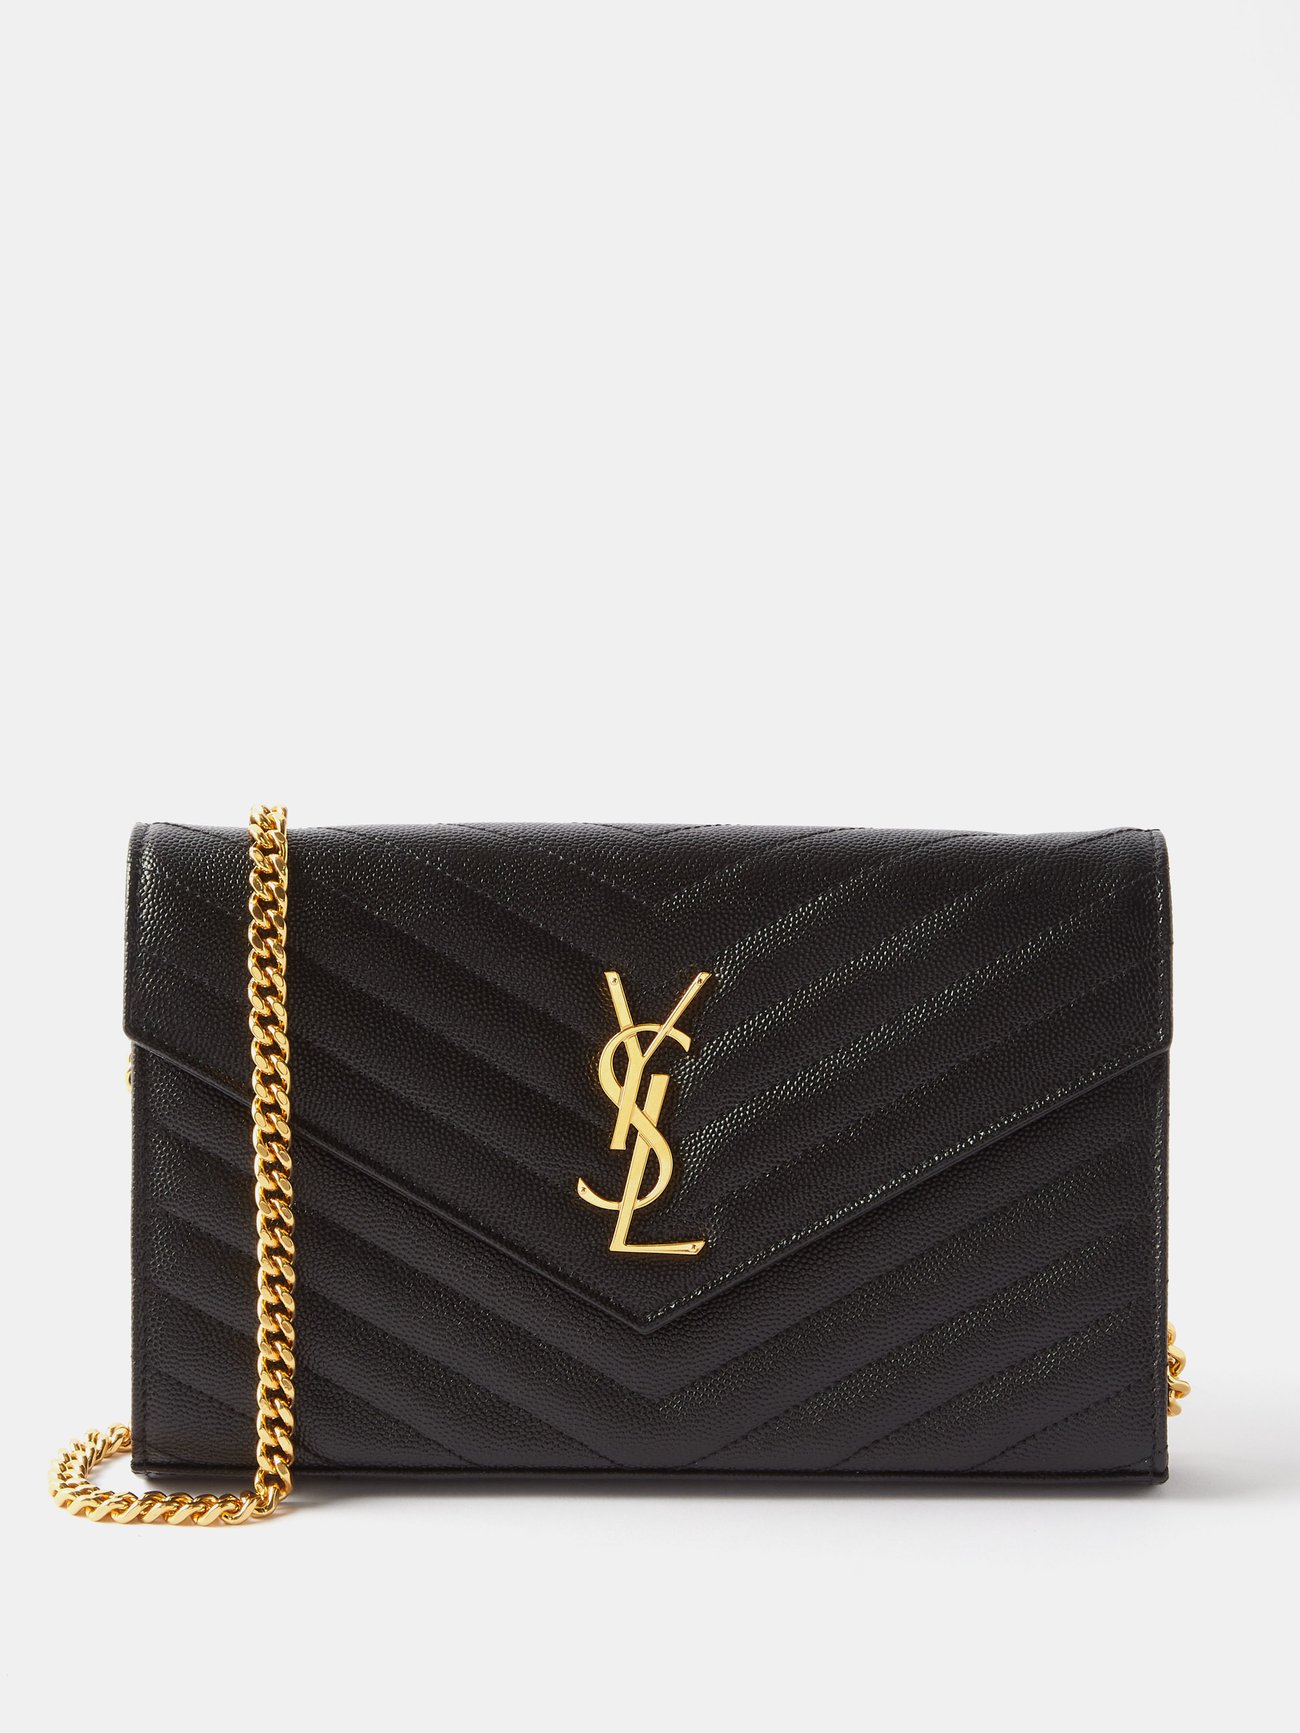 ysl wallet on chain black